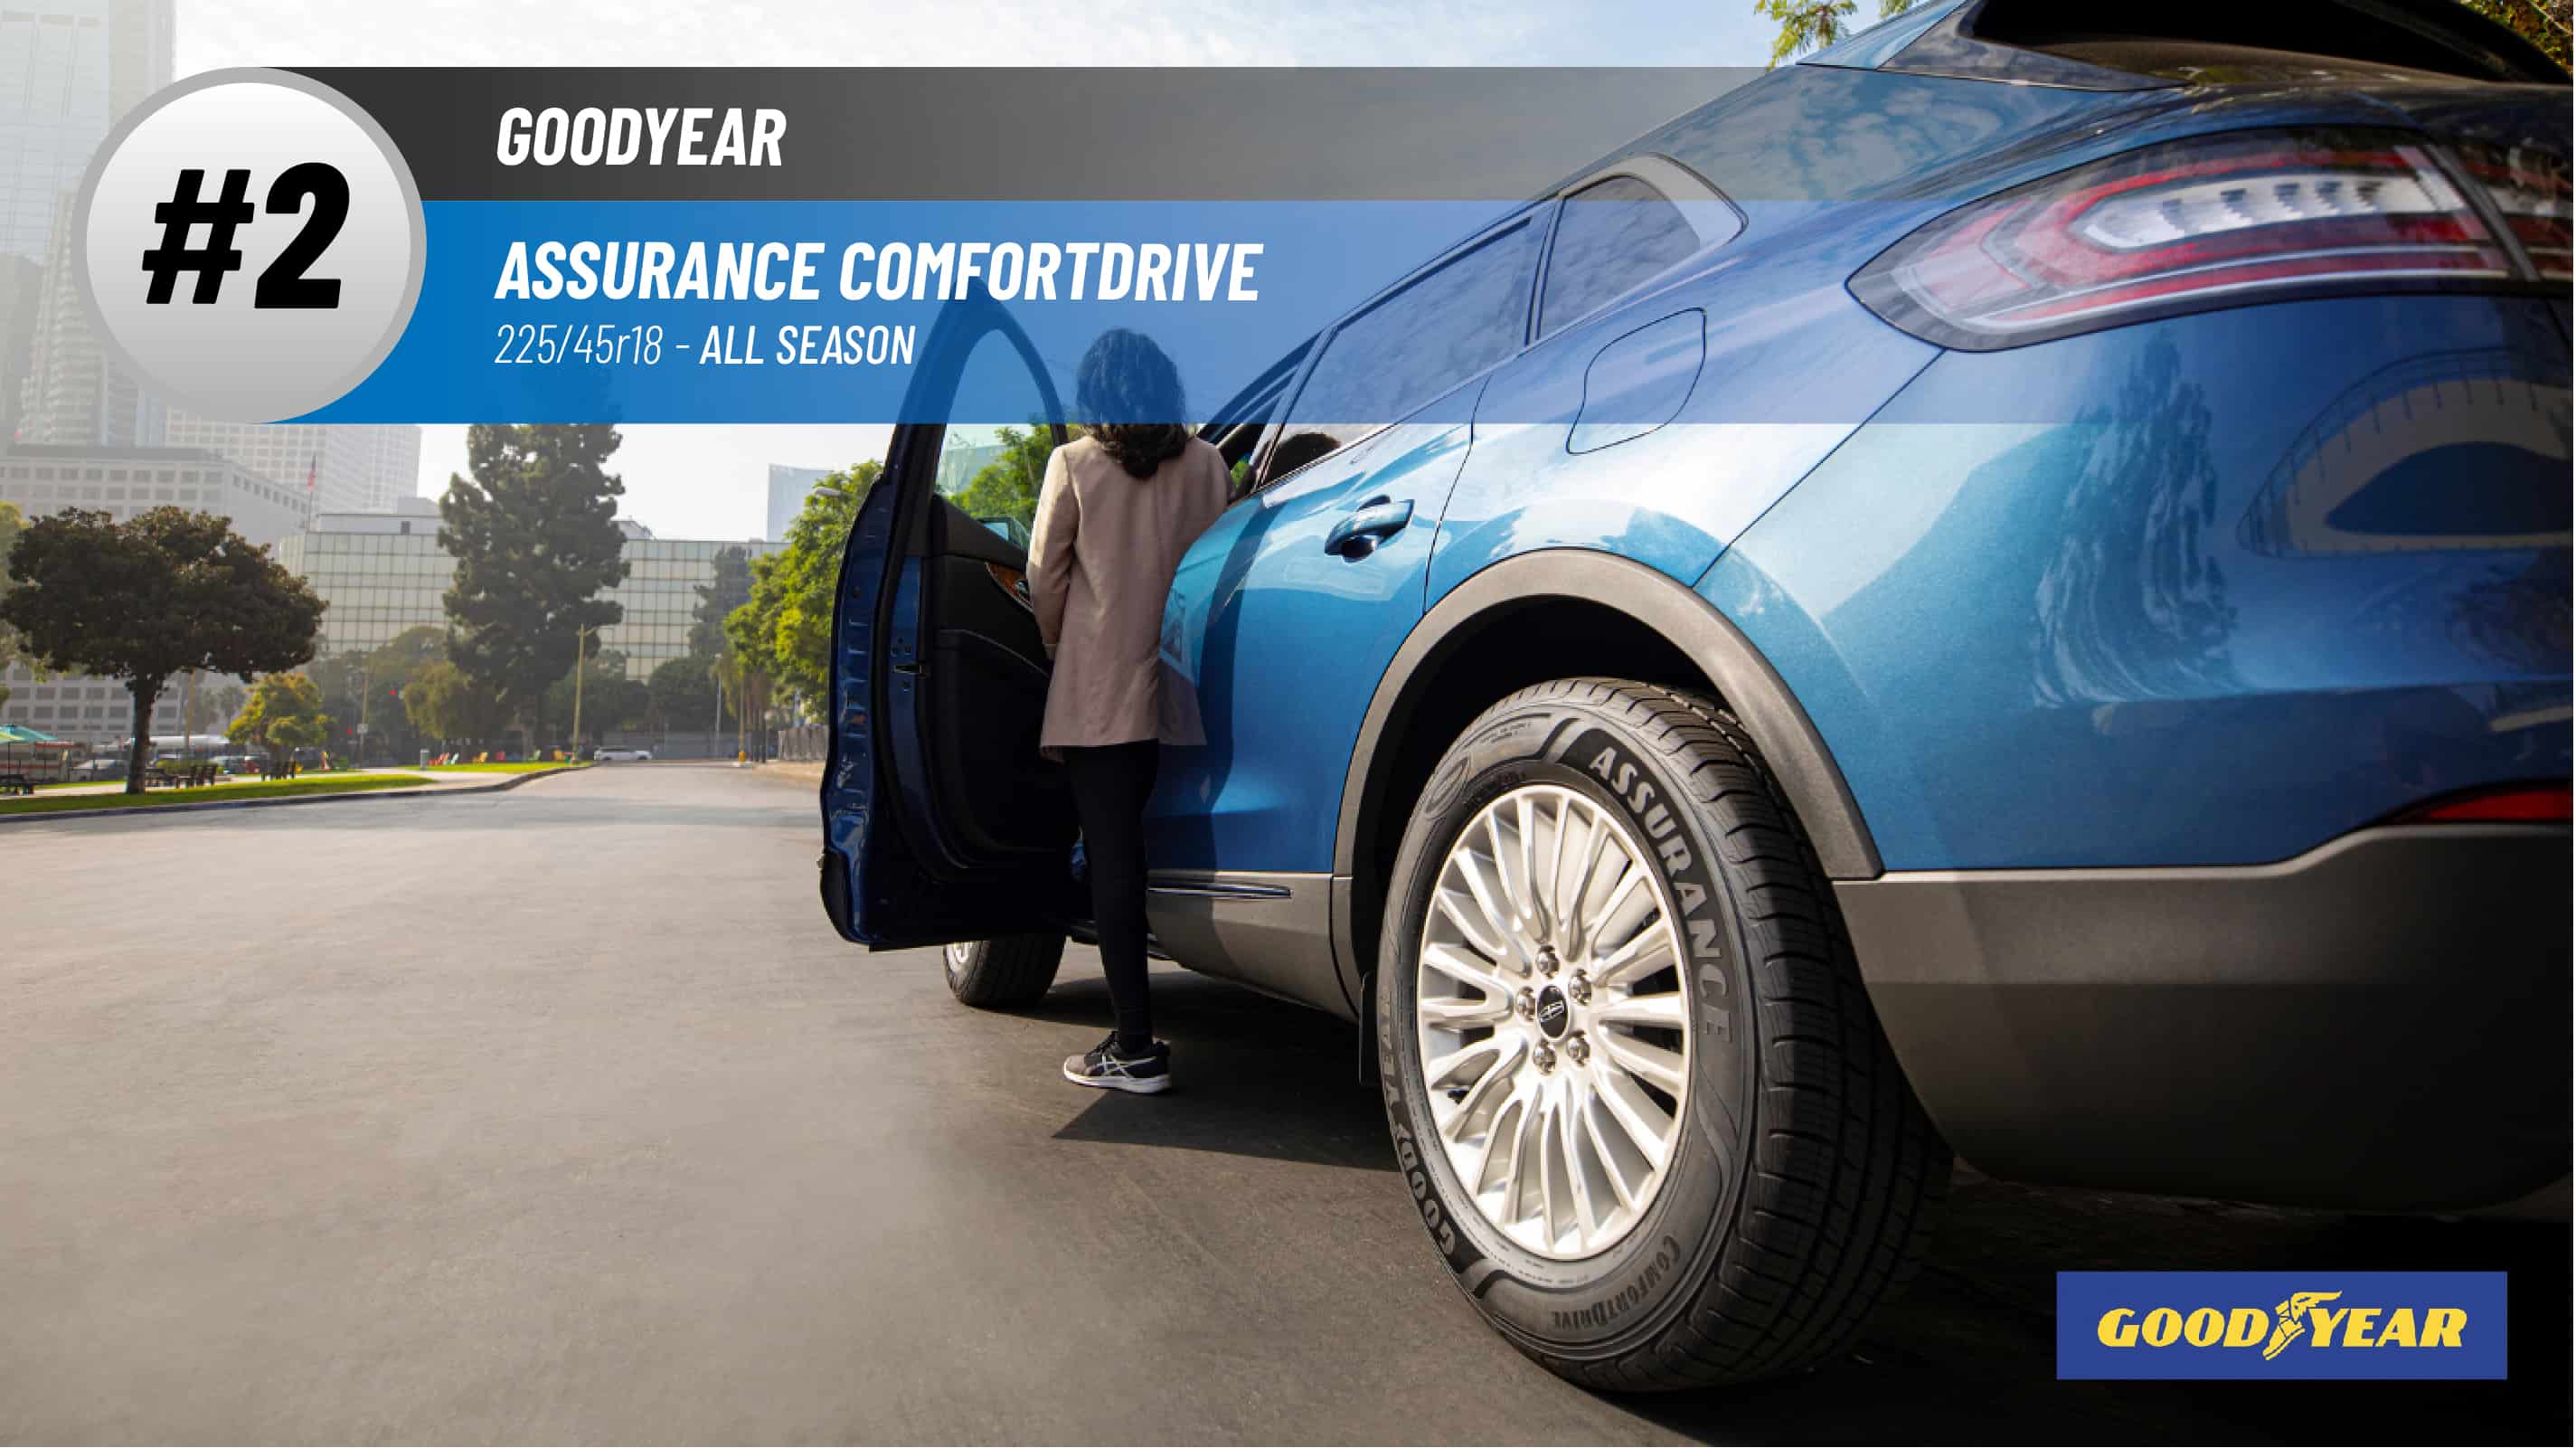 Top #2 All Season Tires: Goodyear Assurance Comfortdrive – best 225/45r18